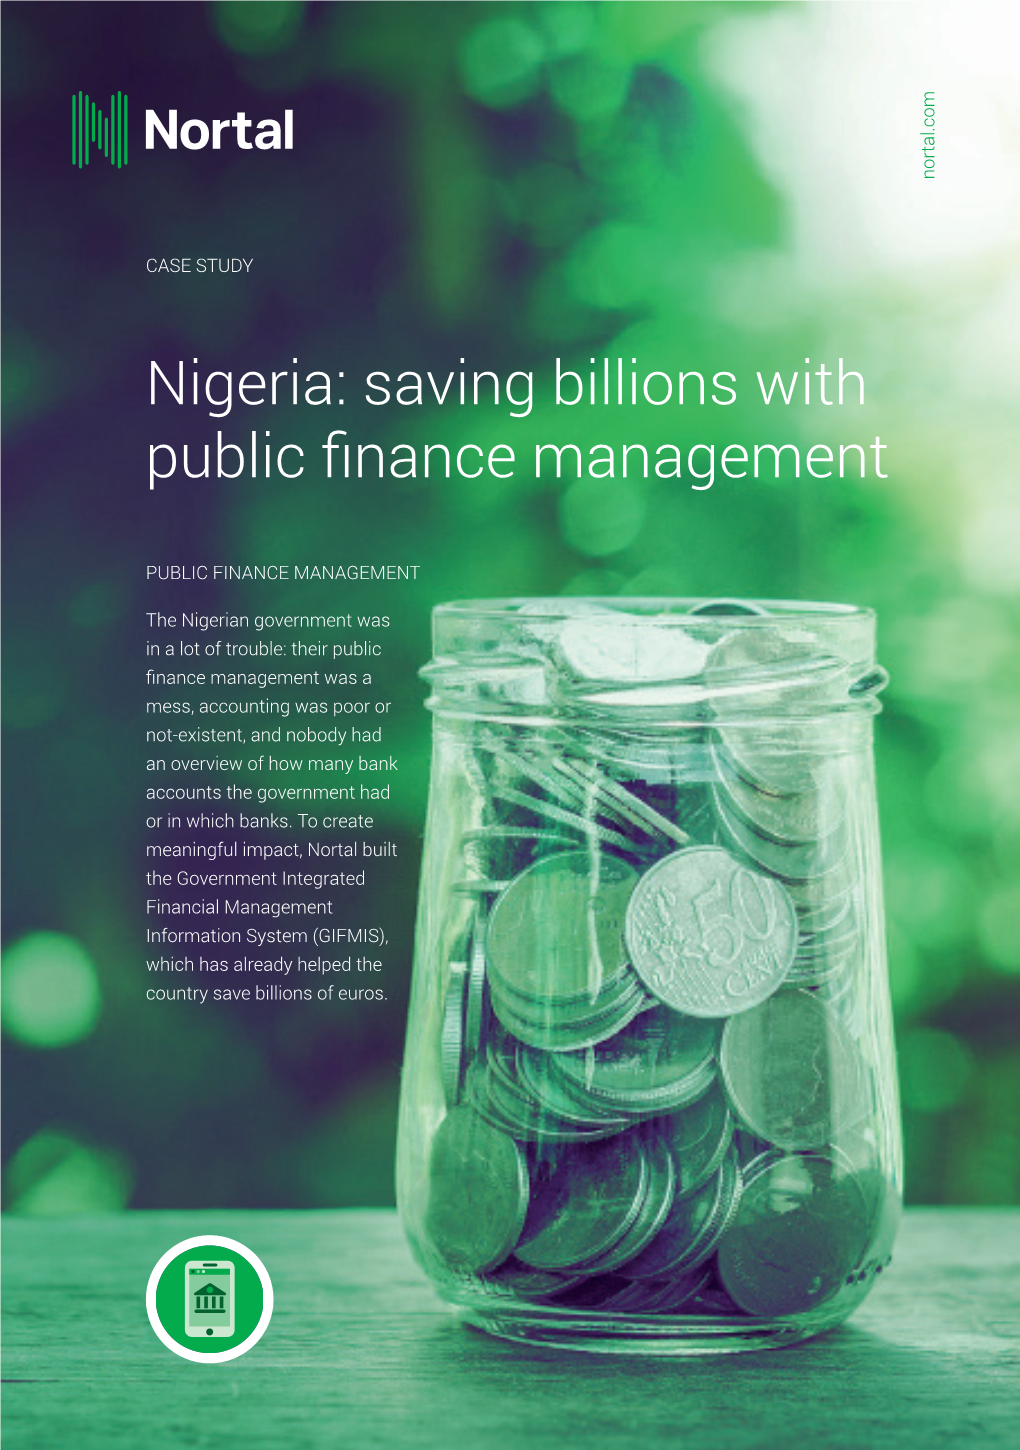 NIGERIA: SAVING BILLIONS with PUBLIC FINANCE MANAGEMENT Transparent Public Finance Management Can Help Save Billions